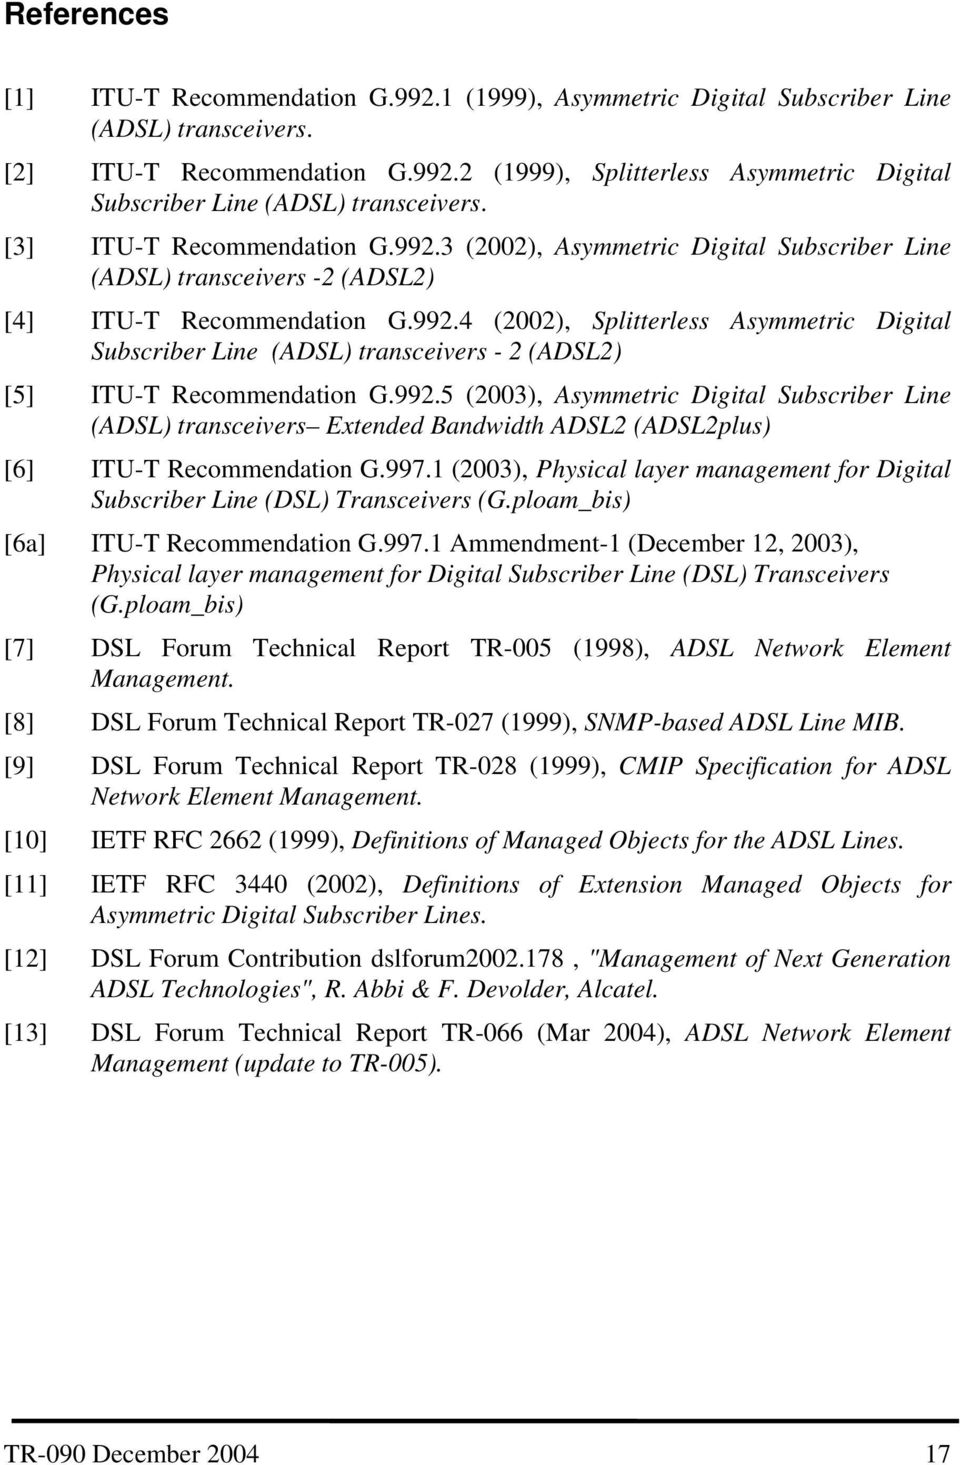 992.5 (2003), Asymmetric Digital Subscriber Line () transceivers Extended Bandwidth 2 (2plus) [6] ITU-T Recommendation G.997.